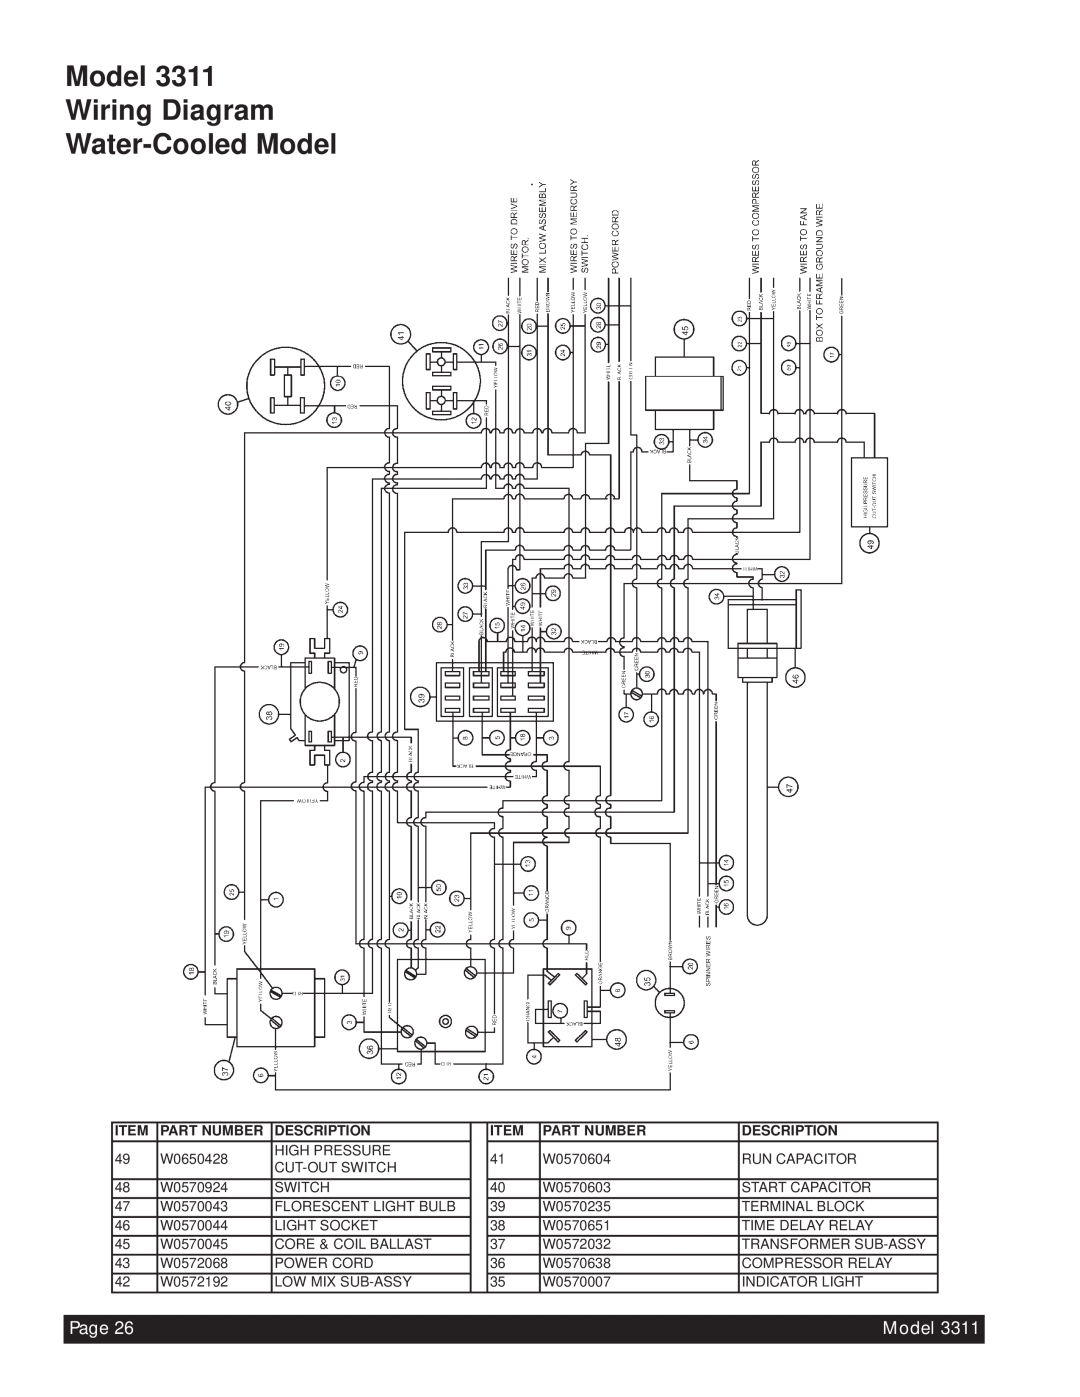 Beverage-Air 3311 manual Model Wiring Diagram Water-CooledModel, Page, Part Number, Description 